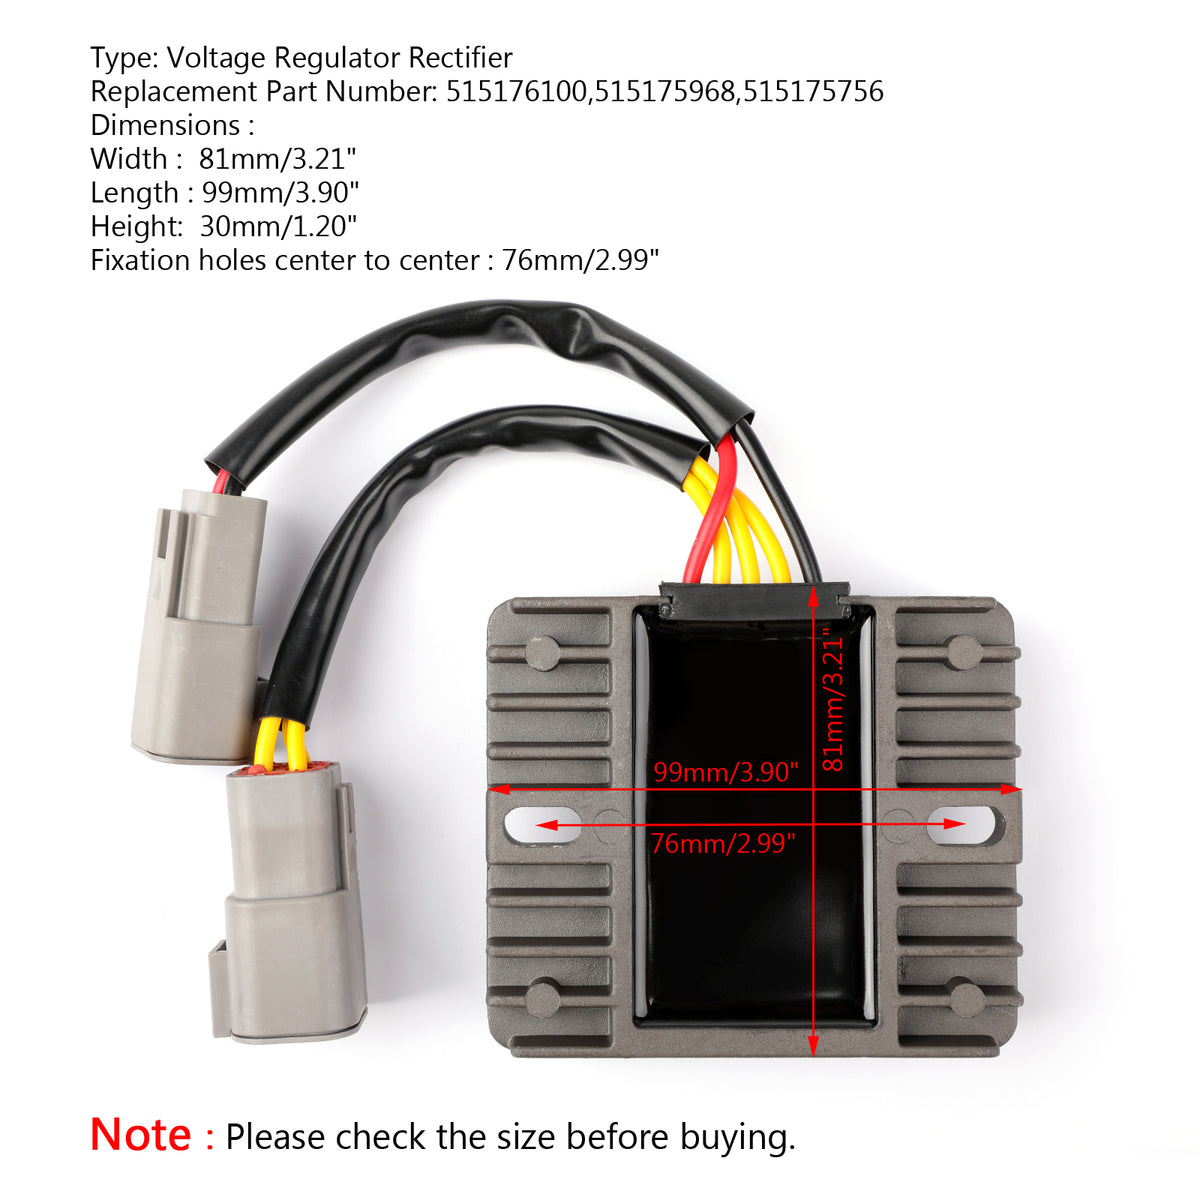 Voltage Regulator Rectifier For SKI DOO EXPEDITION GSX GTX MX Z SKANDIC 600 800